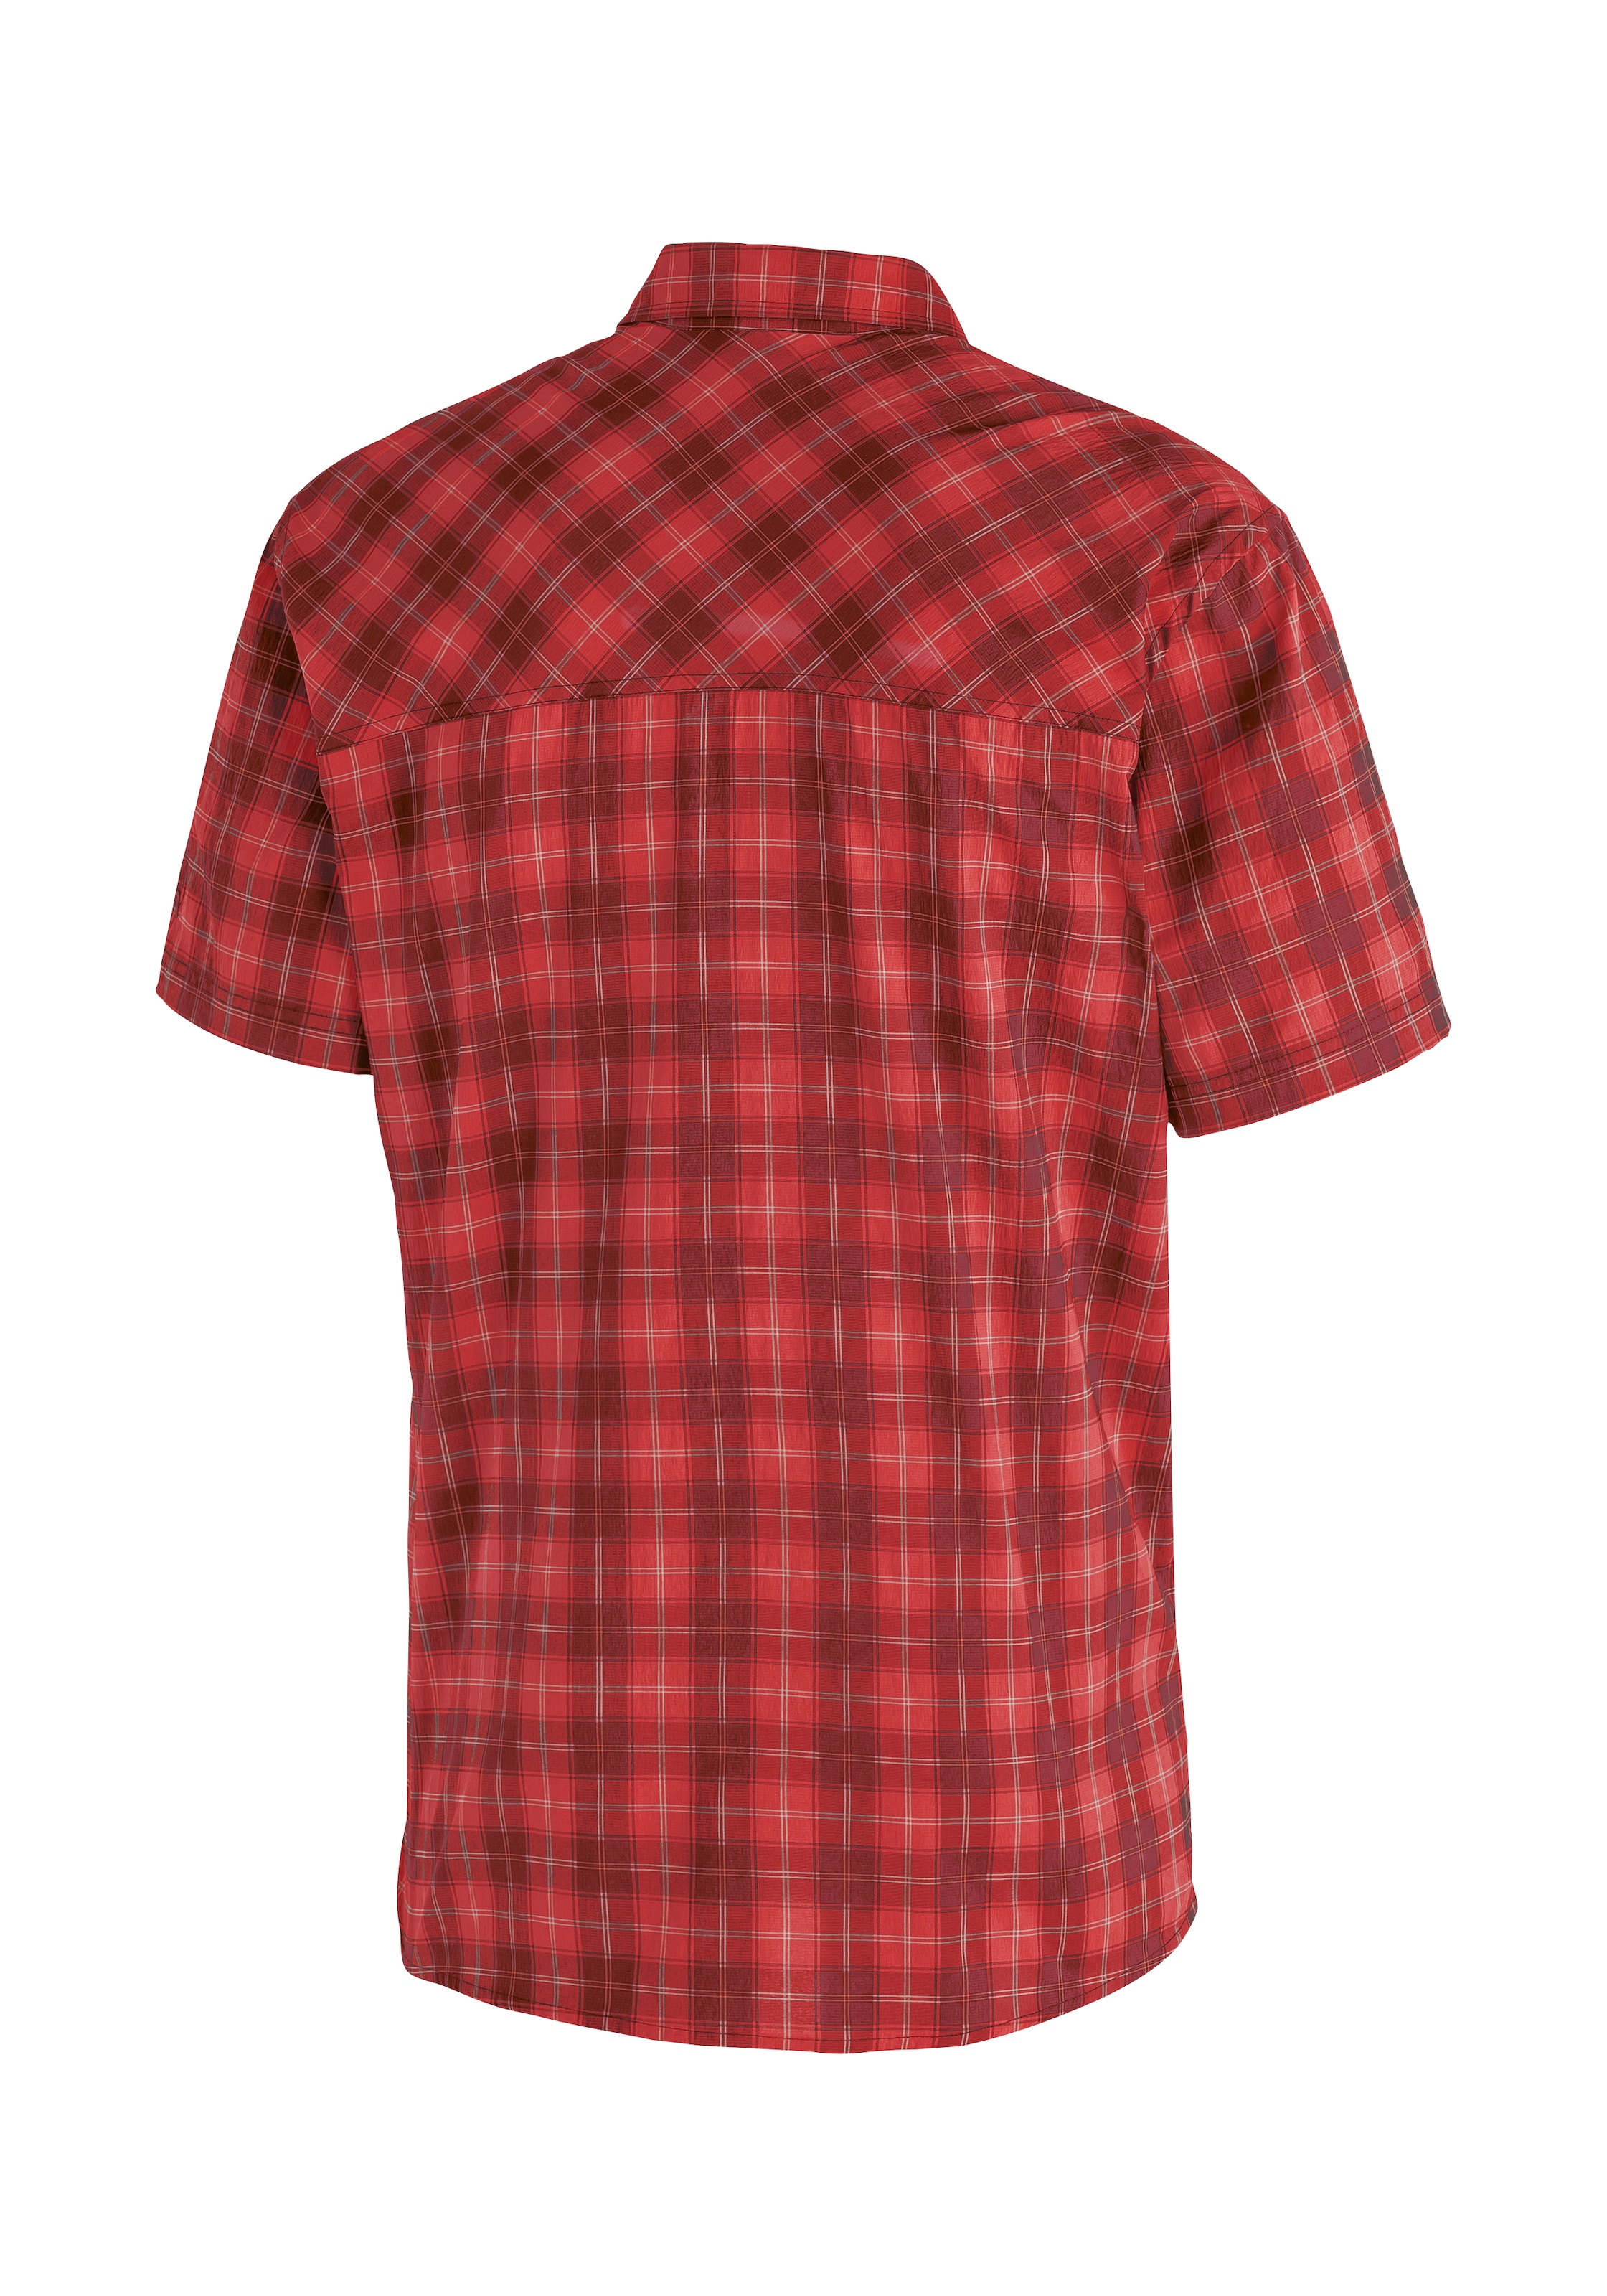 Outdoorhemd »Kasen S/S M«, kurzarm Herrenhemd, atmungsaktives Wanderhemd, Karohemd